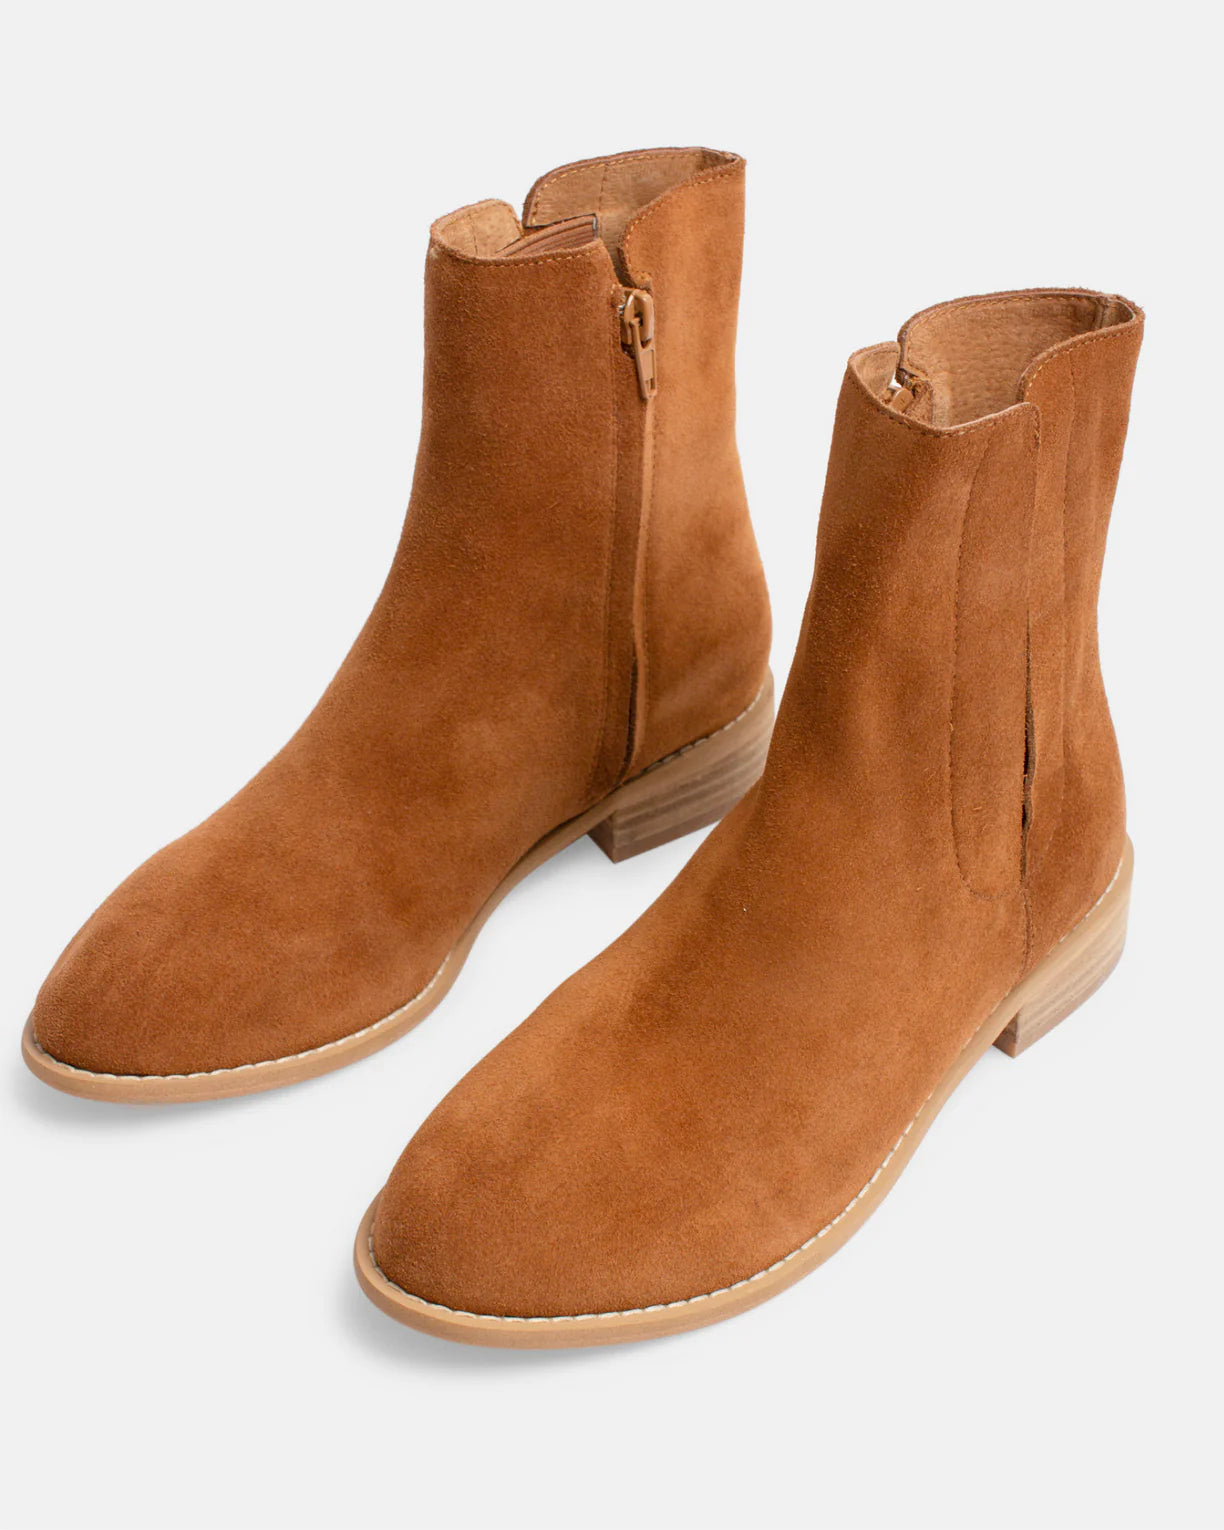 Walnut Melbourne - Denmark Leather boot in Caramel Suede